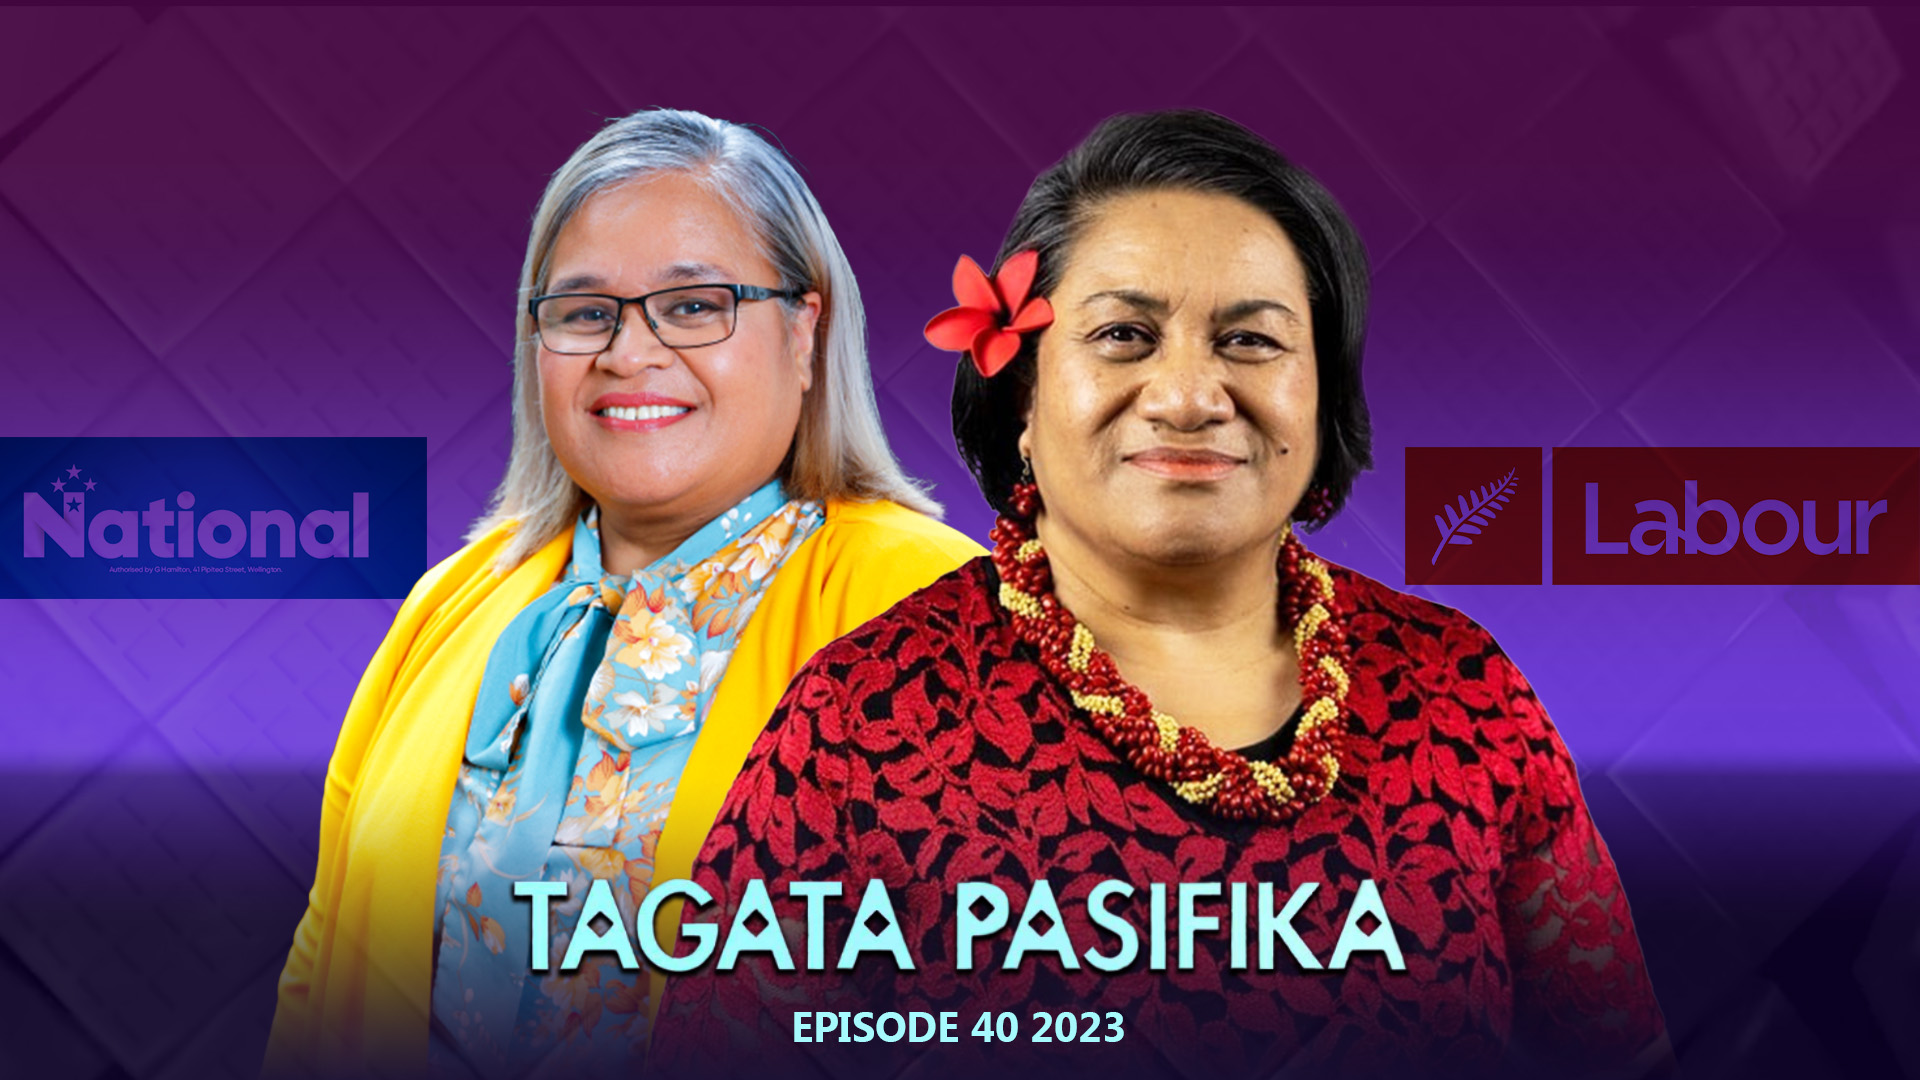 WATCH: Tagata Pasifika 2023 Episode 40